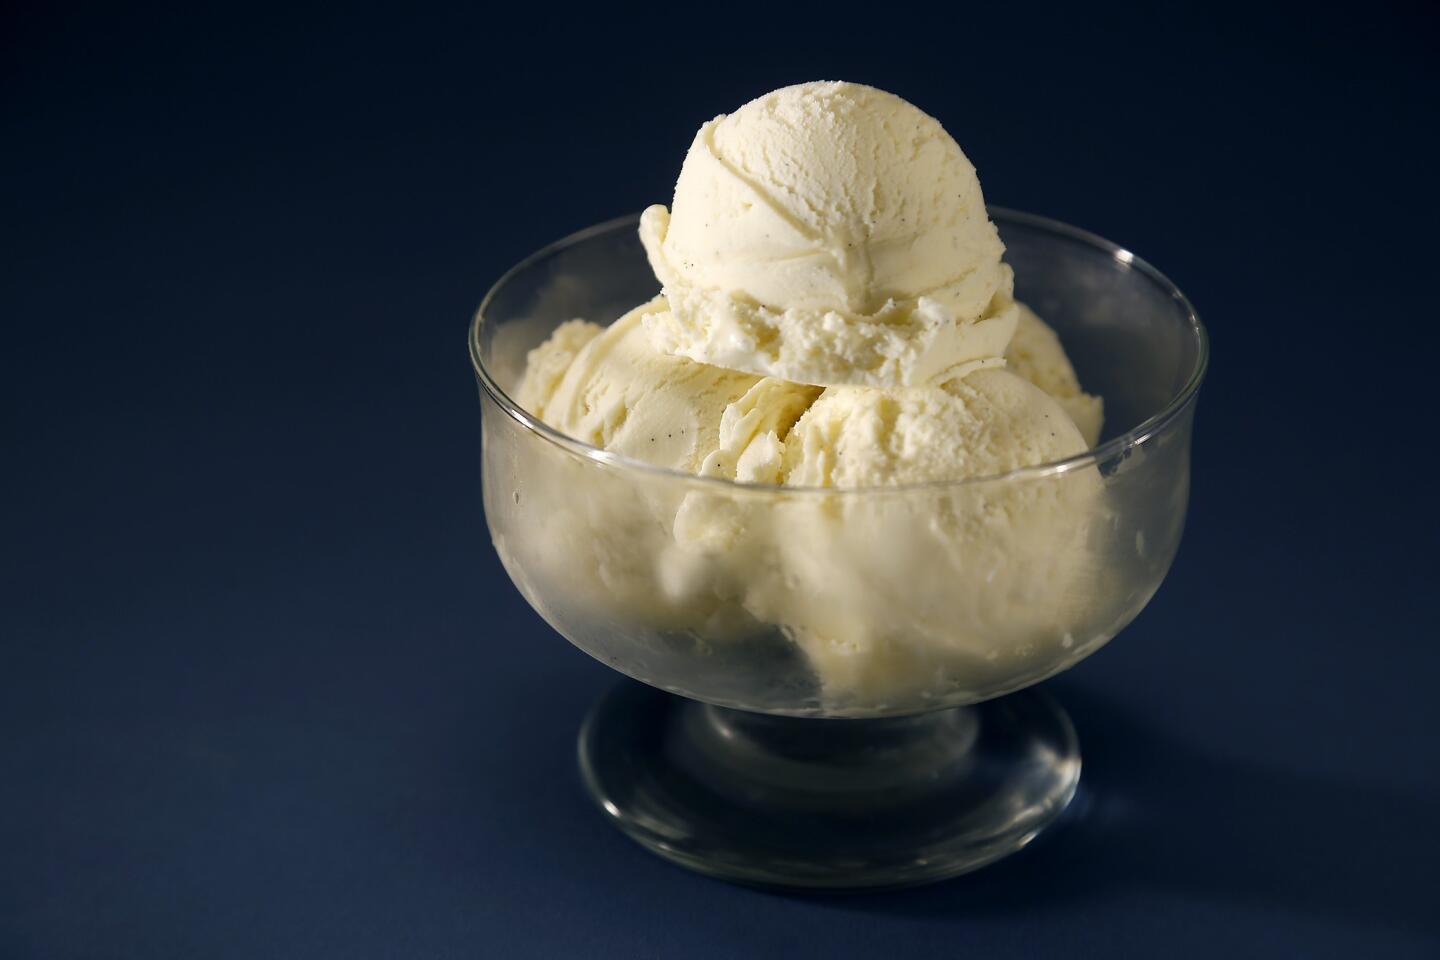 The secret to making delicious vanilla ice cream is to use both vanilla bean and vanilla extract.